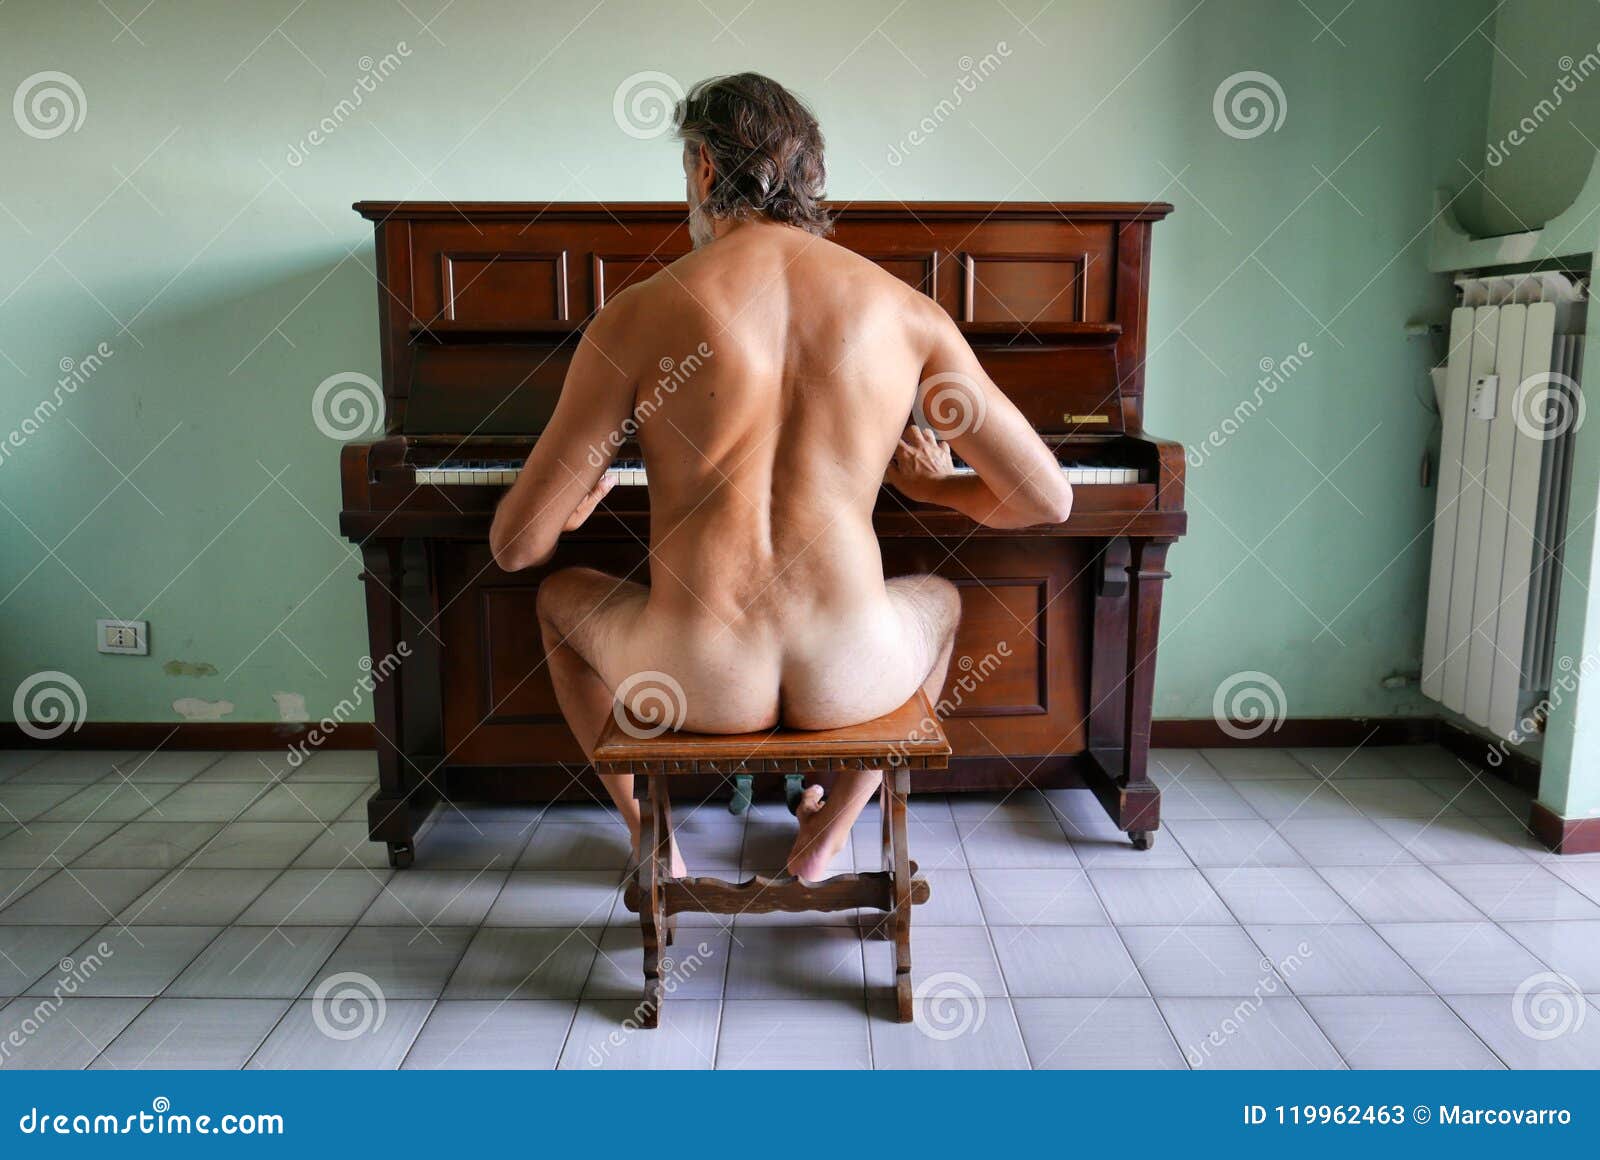 Playing piano naked